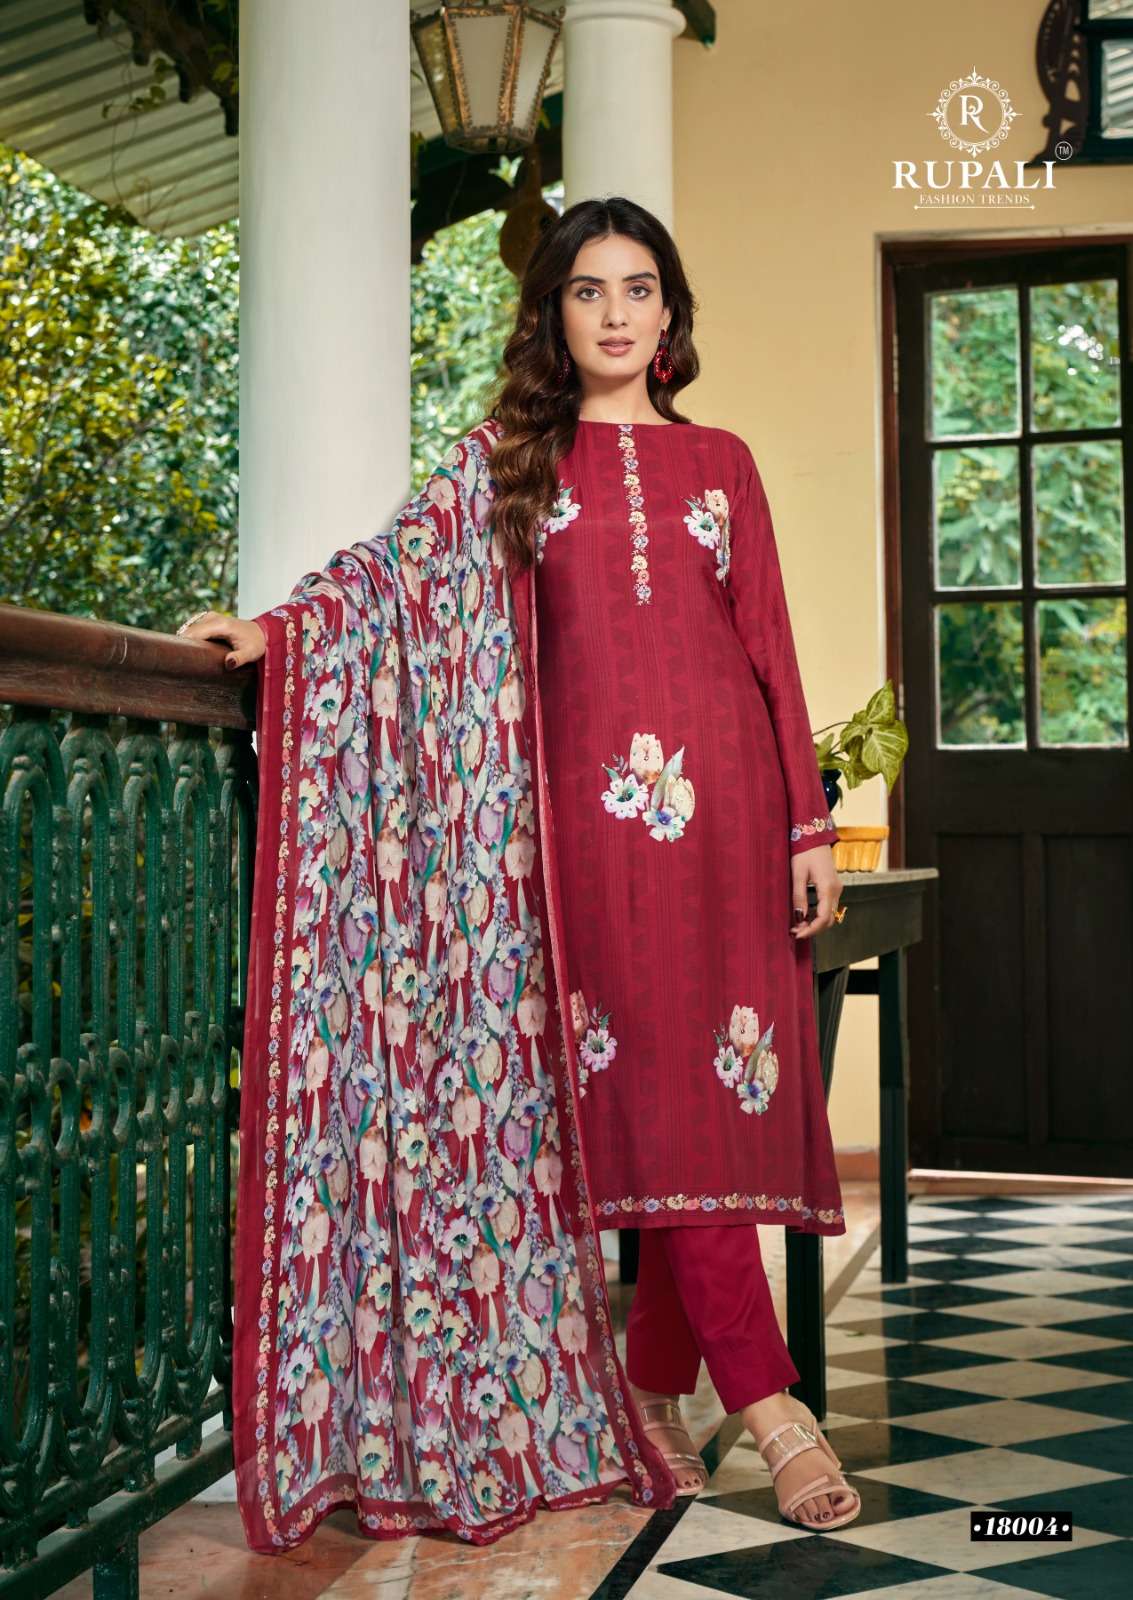 rupali fashion haniya 18001-18004 series latest designer salwar kameez wholesaler surat gujarat